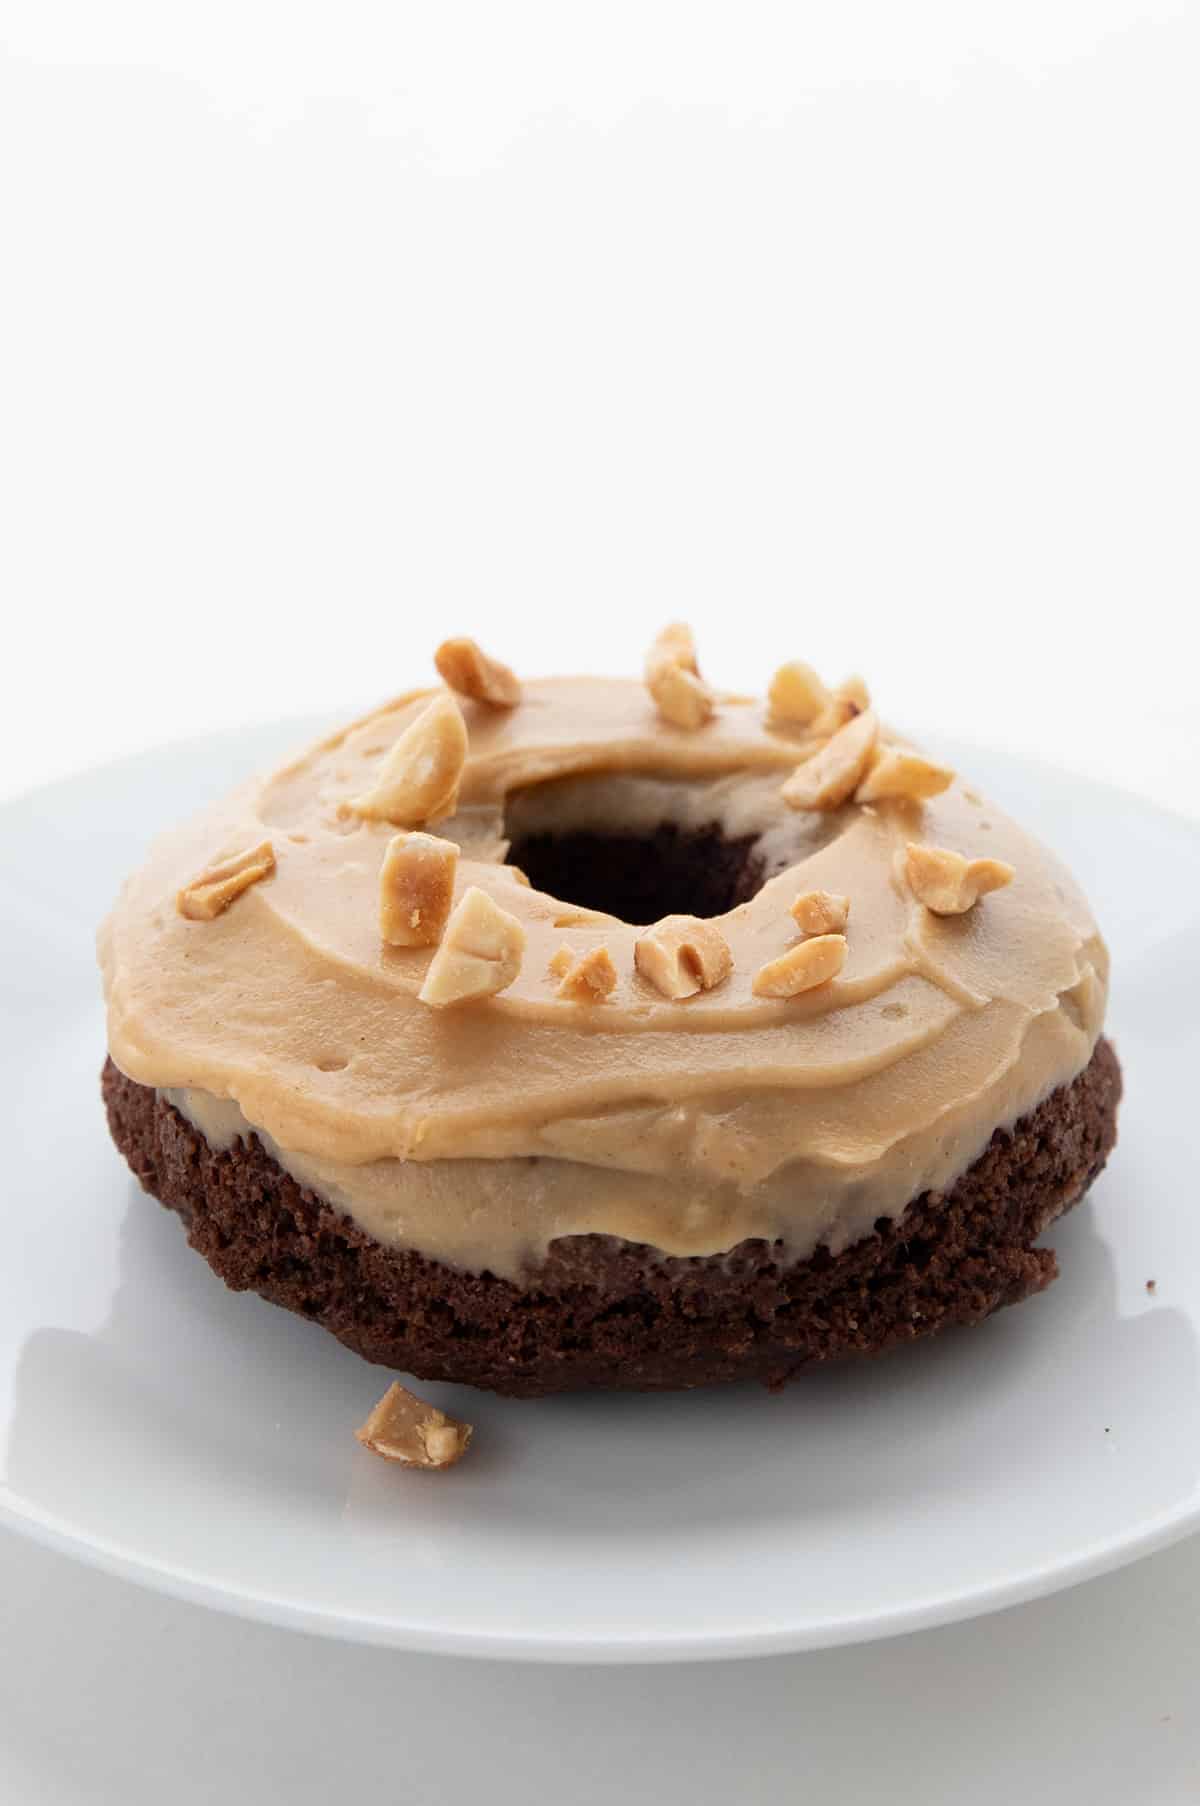 A keto chocolate donut with peanut butter glaze on a white plate.